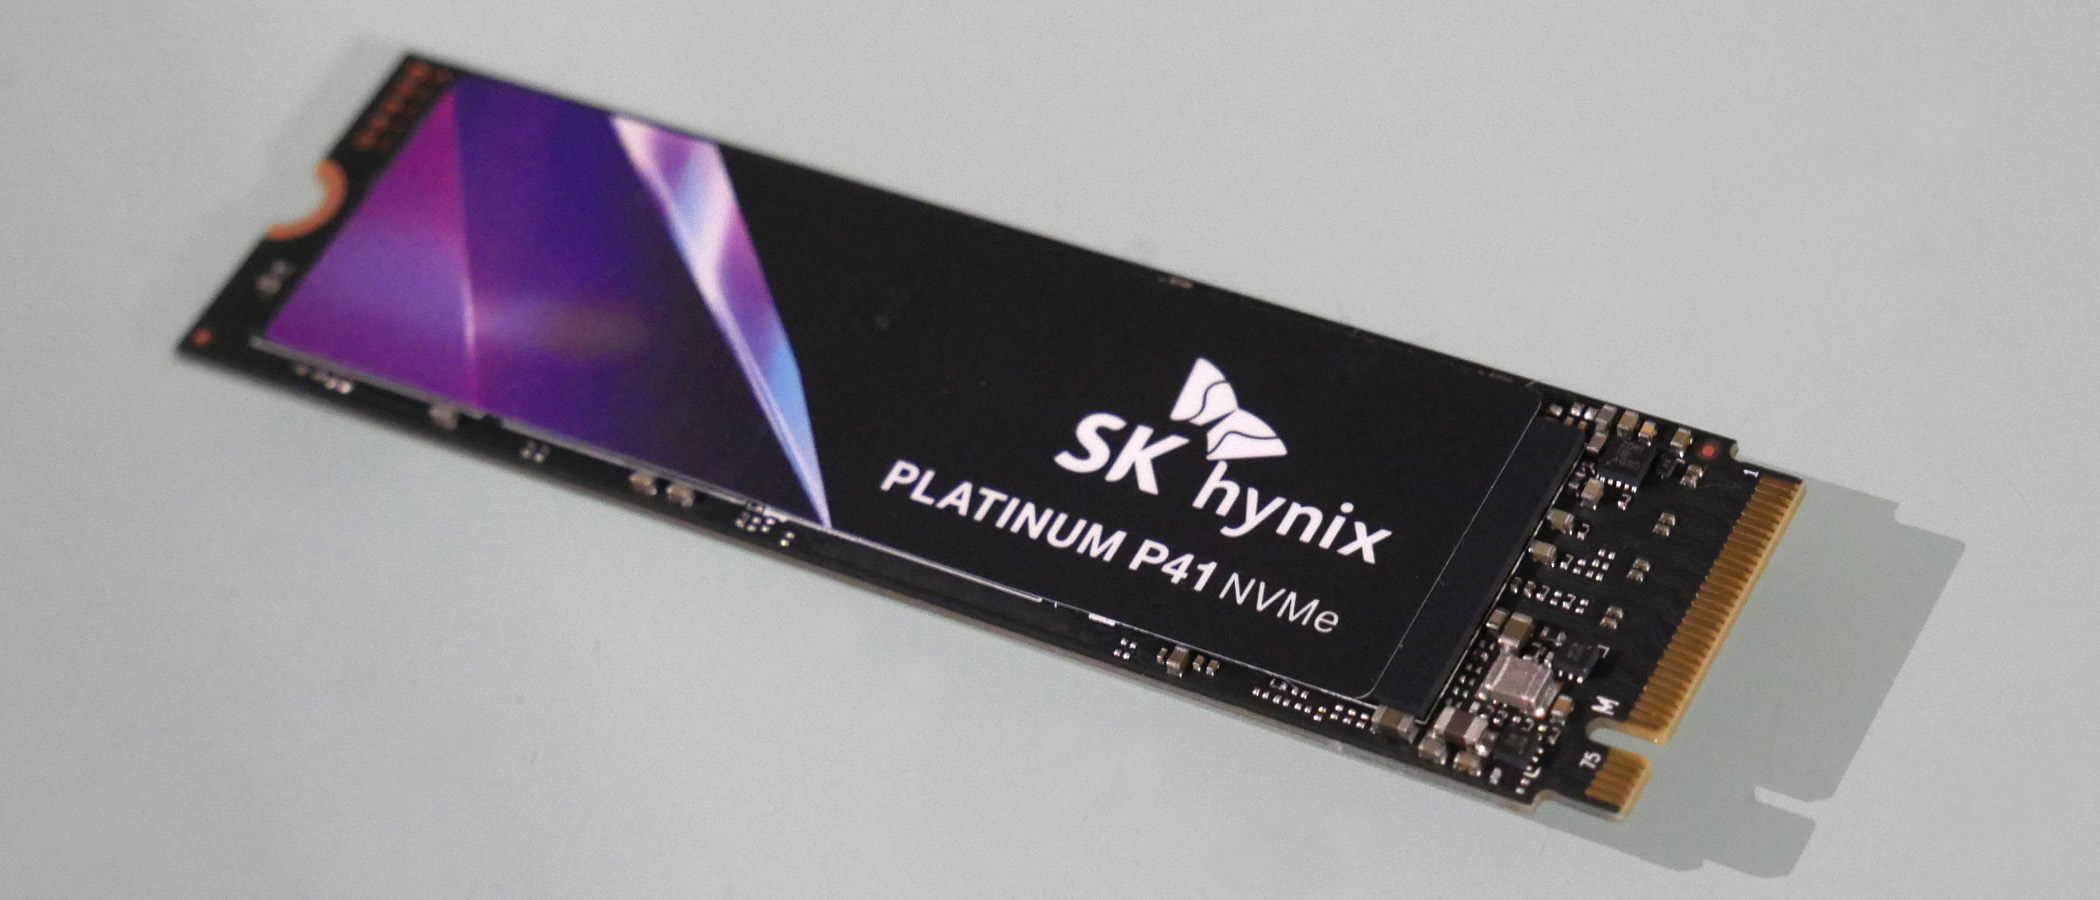 SK Hynix Platinum P41 review: 